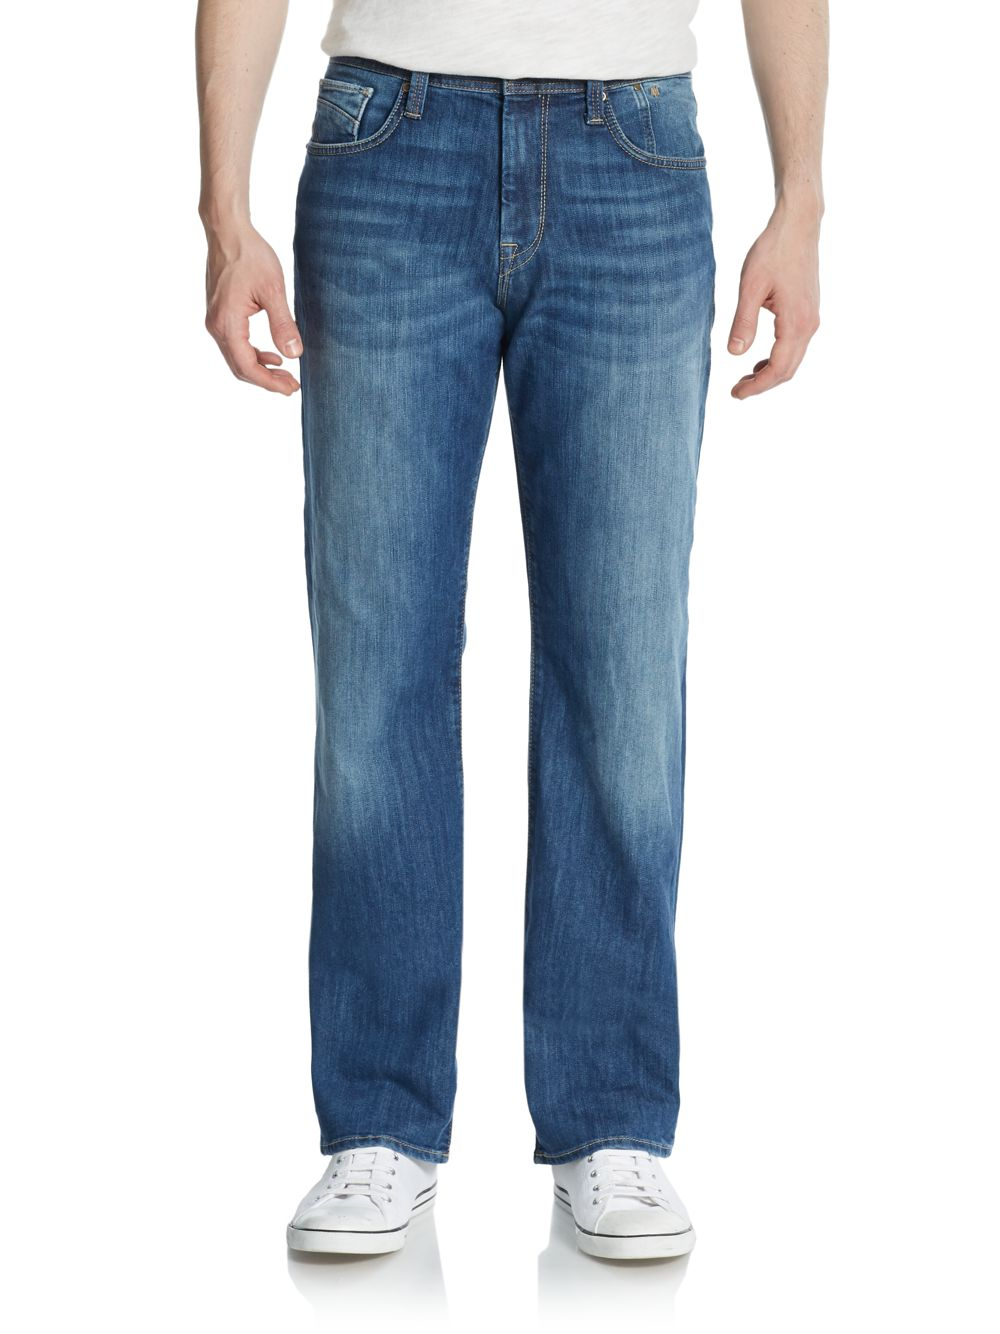 Lyst - Mavi jeans Matt Bootcut Jeans in Blue for Men